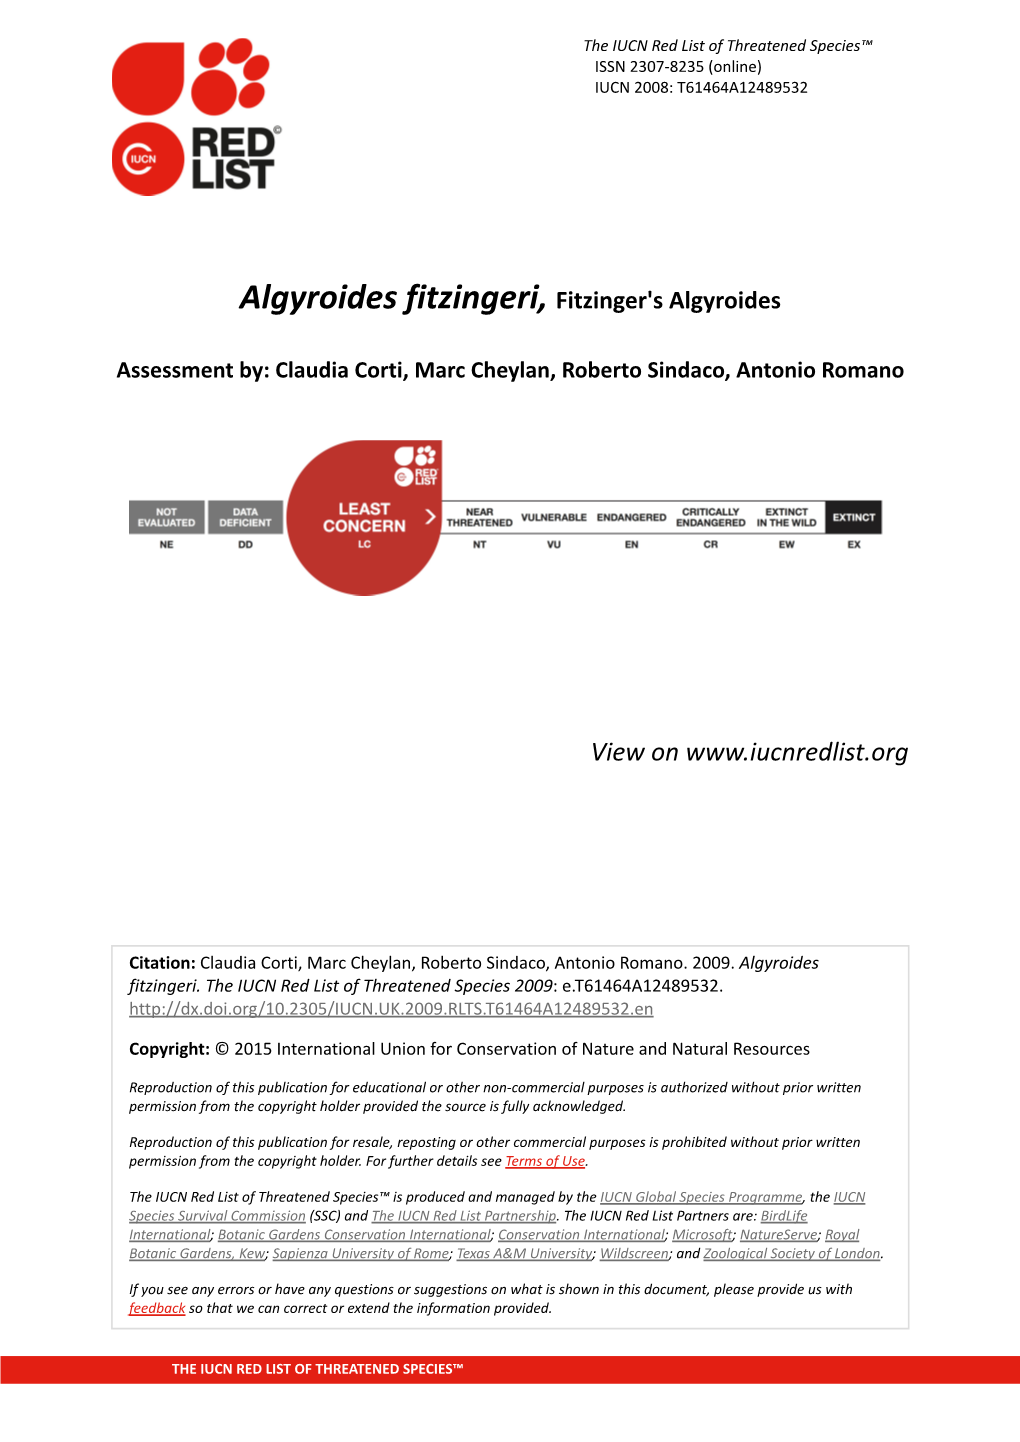 Algyroides Fitzingeri, Fitzinger's Algyroides